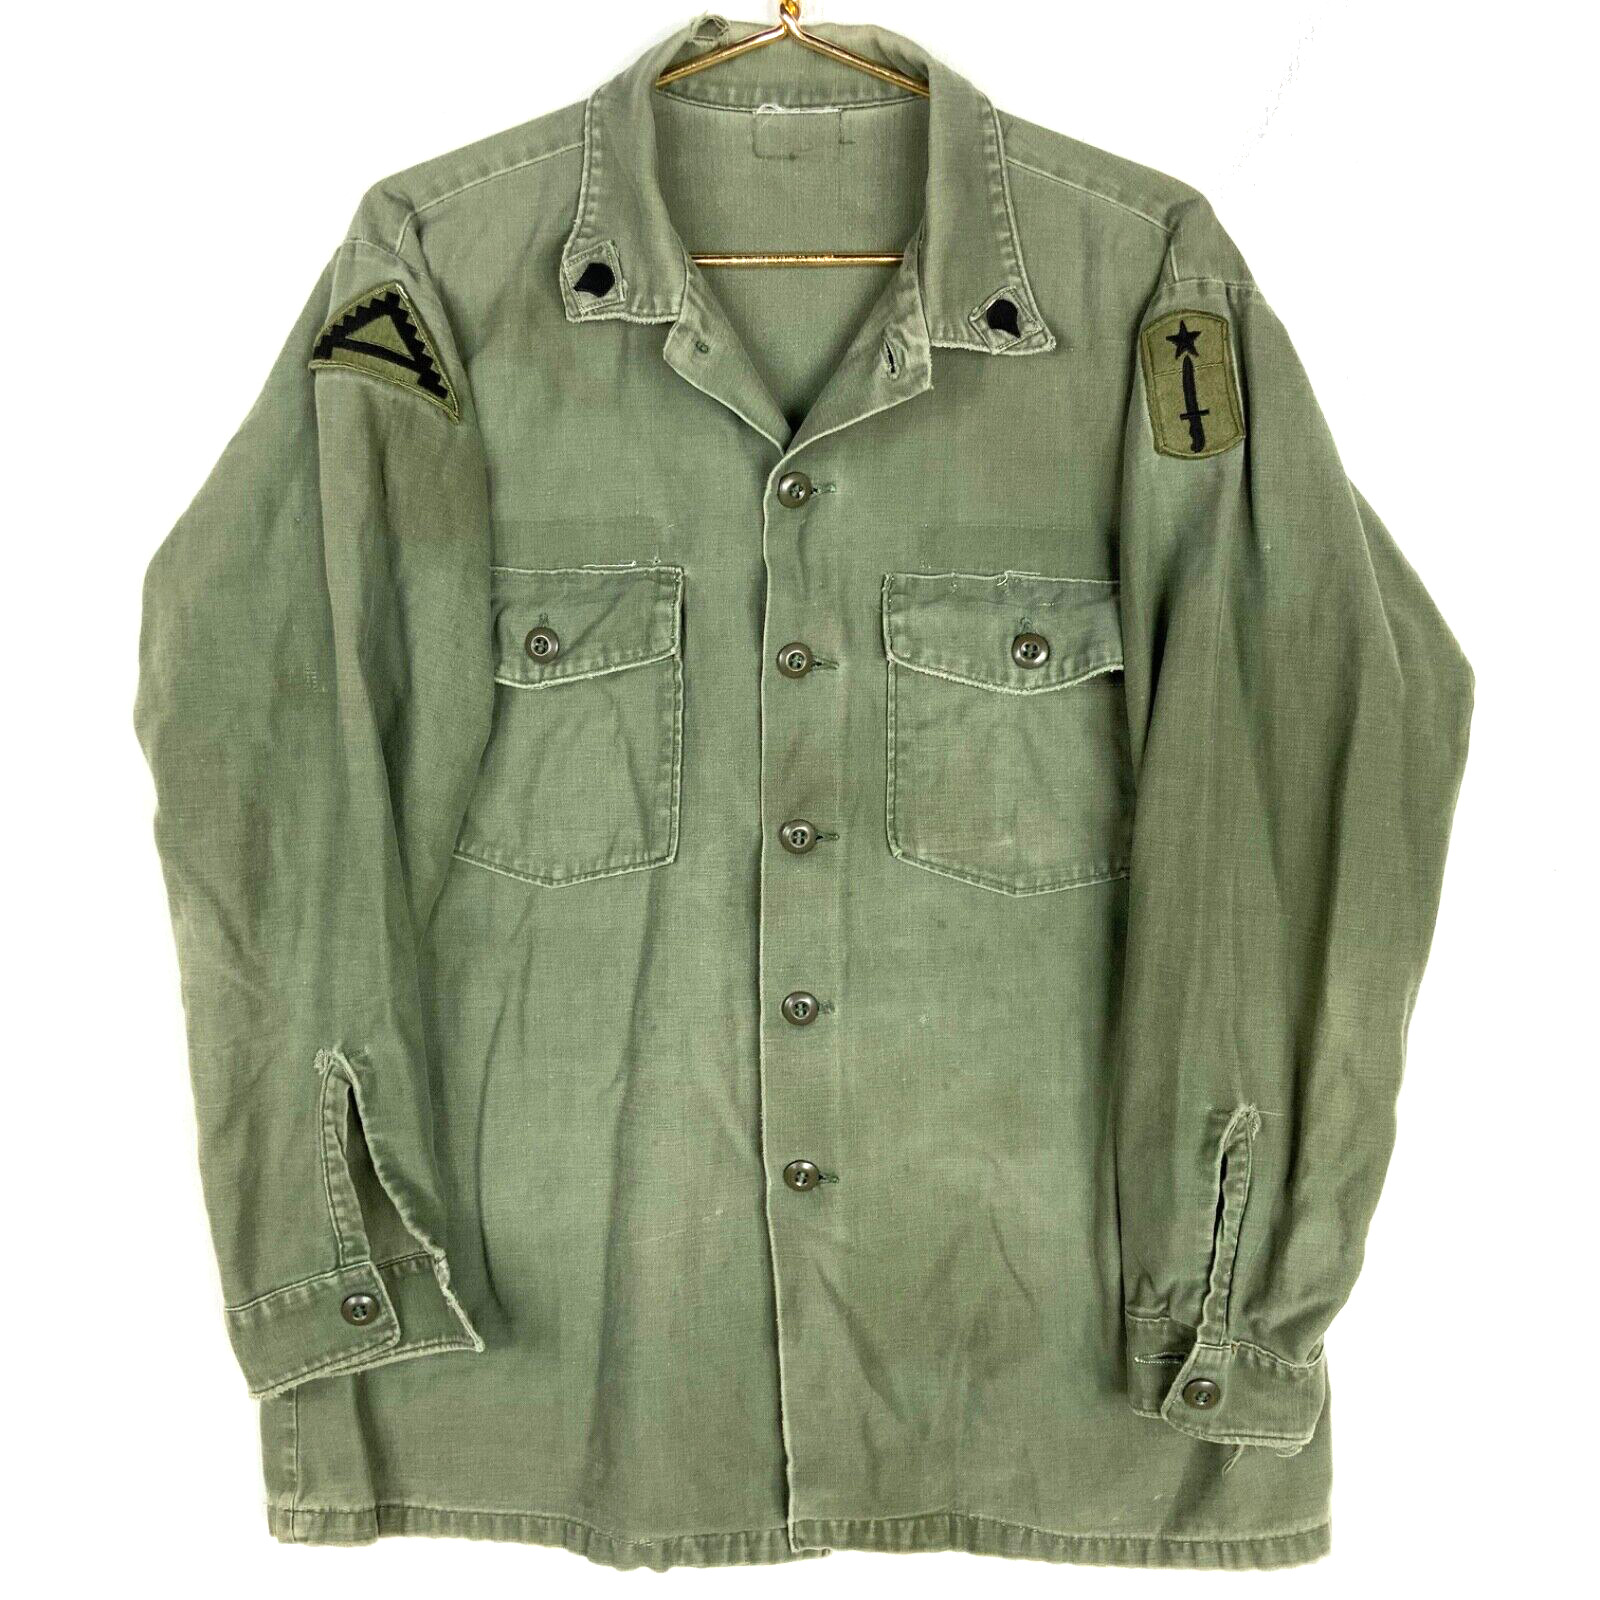 Vintage Us Army Og-107 Button Up Shirt Large Green Vietnam Era 70s